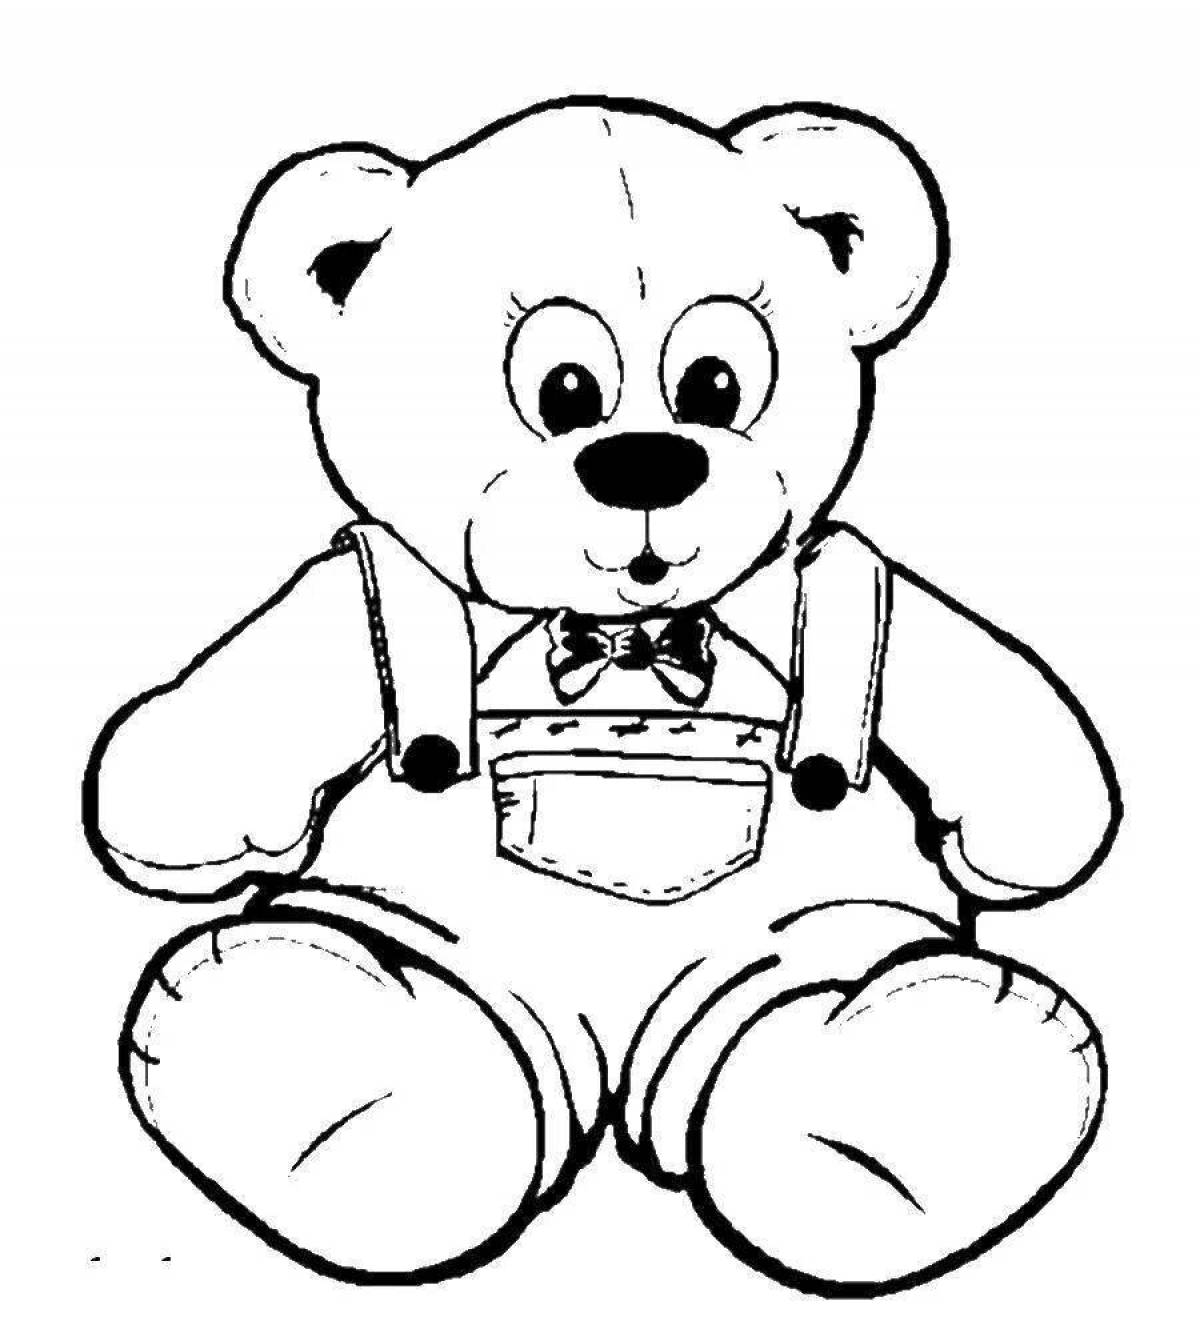 Fun super bear coloring book